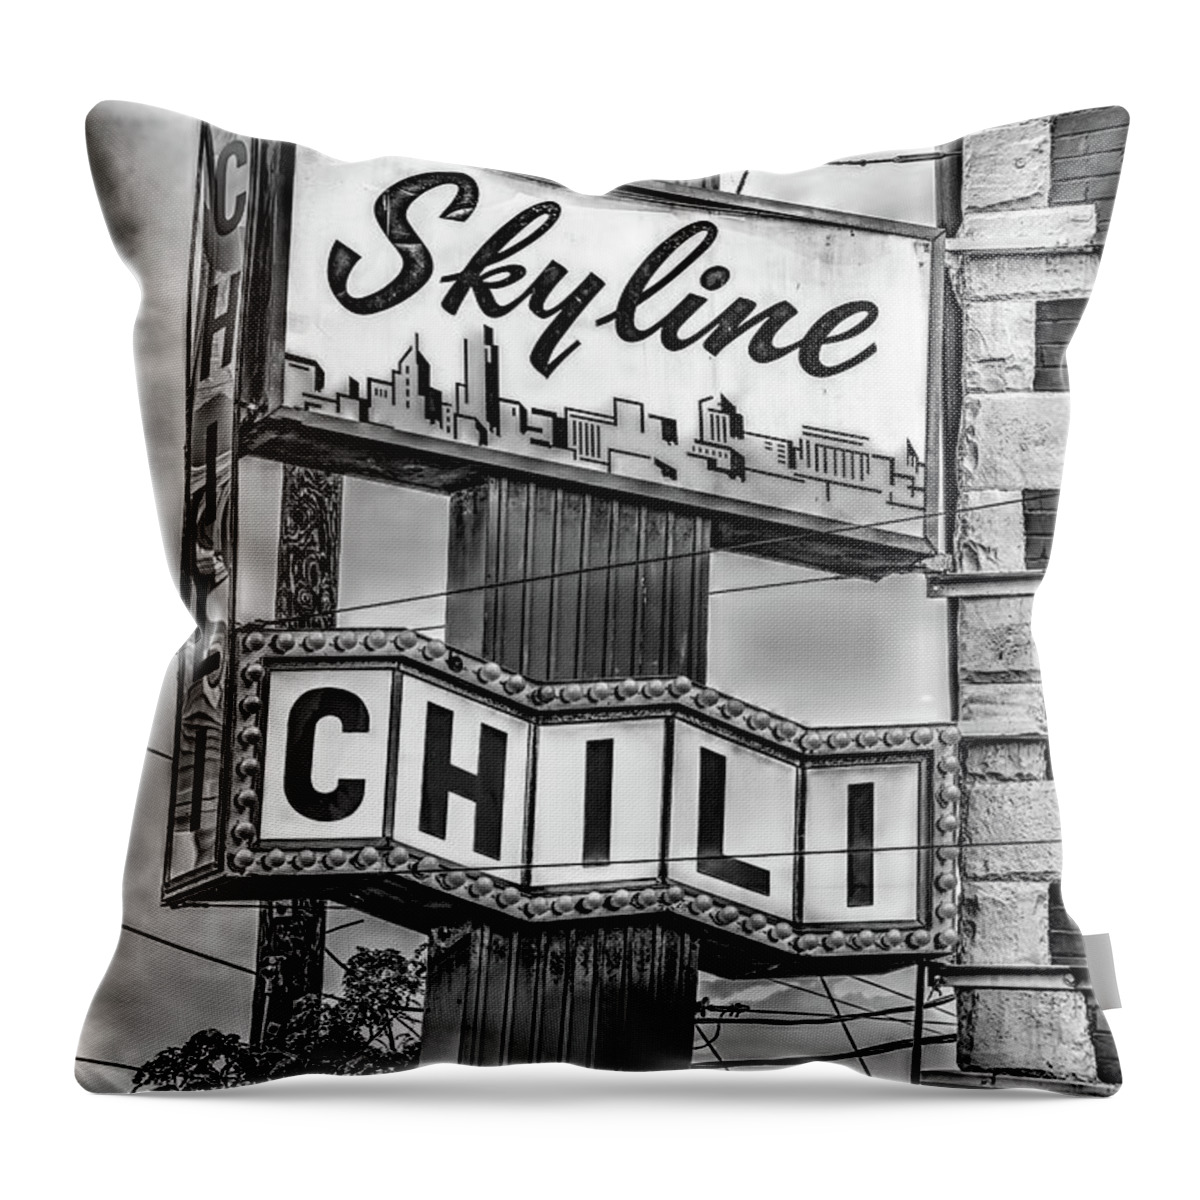 Cincinnati Skyline Throw Pillow featuring the photograph Cincinnati Skyline Chili Sign - Black and White by Gregory Ballos